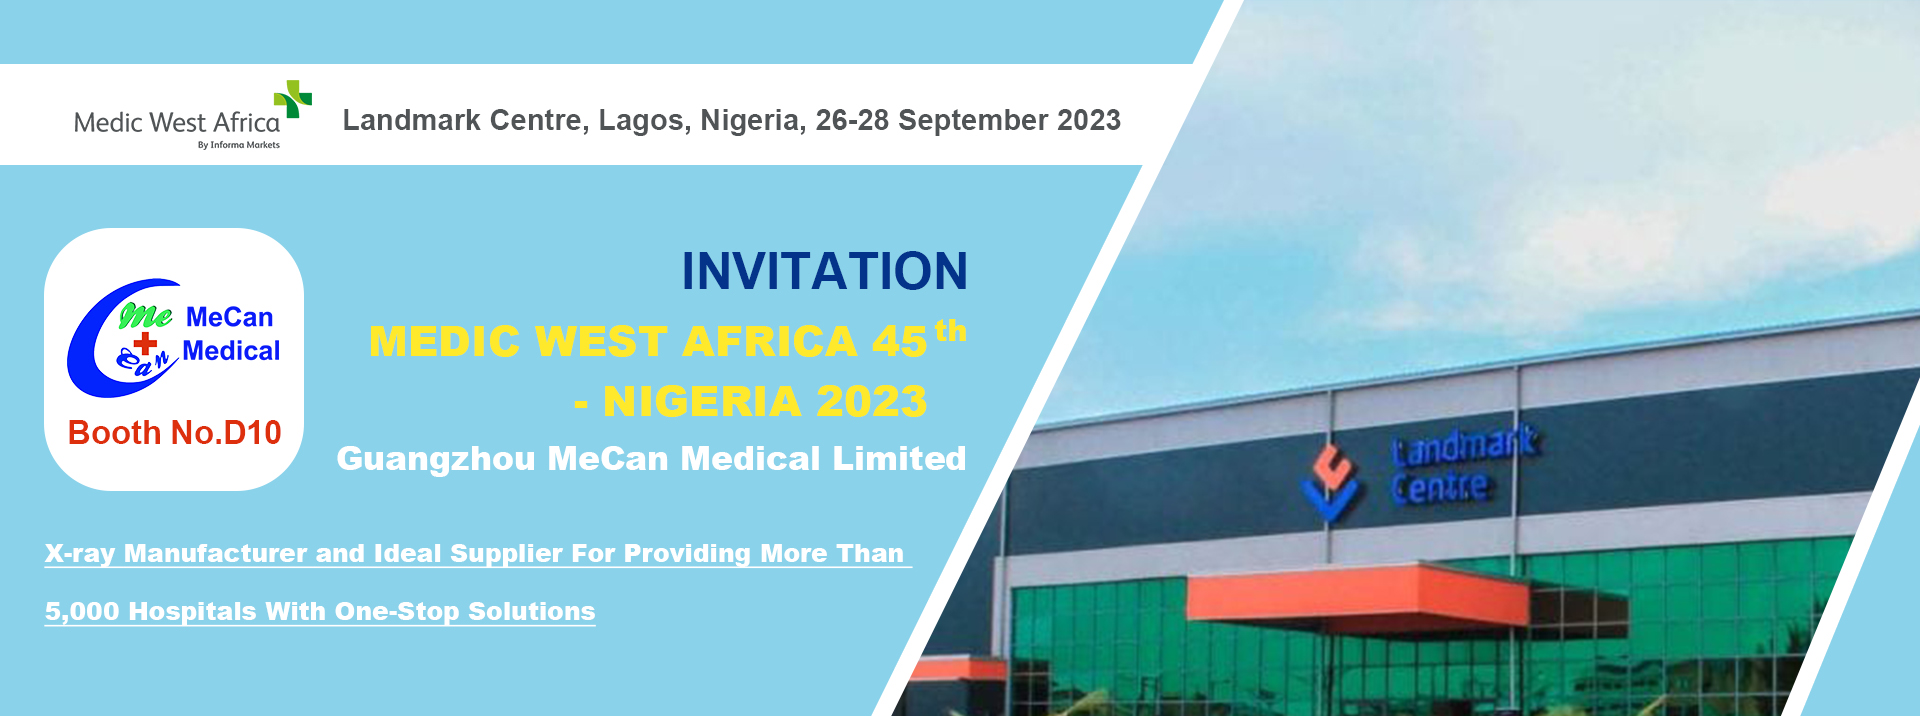 MeCan Medical at Medic West Africa 45th ໃນໄນຈີເລຍ